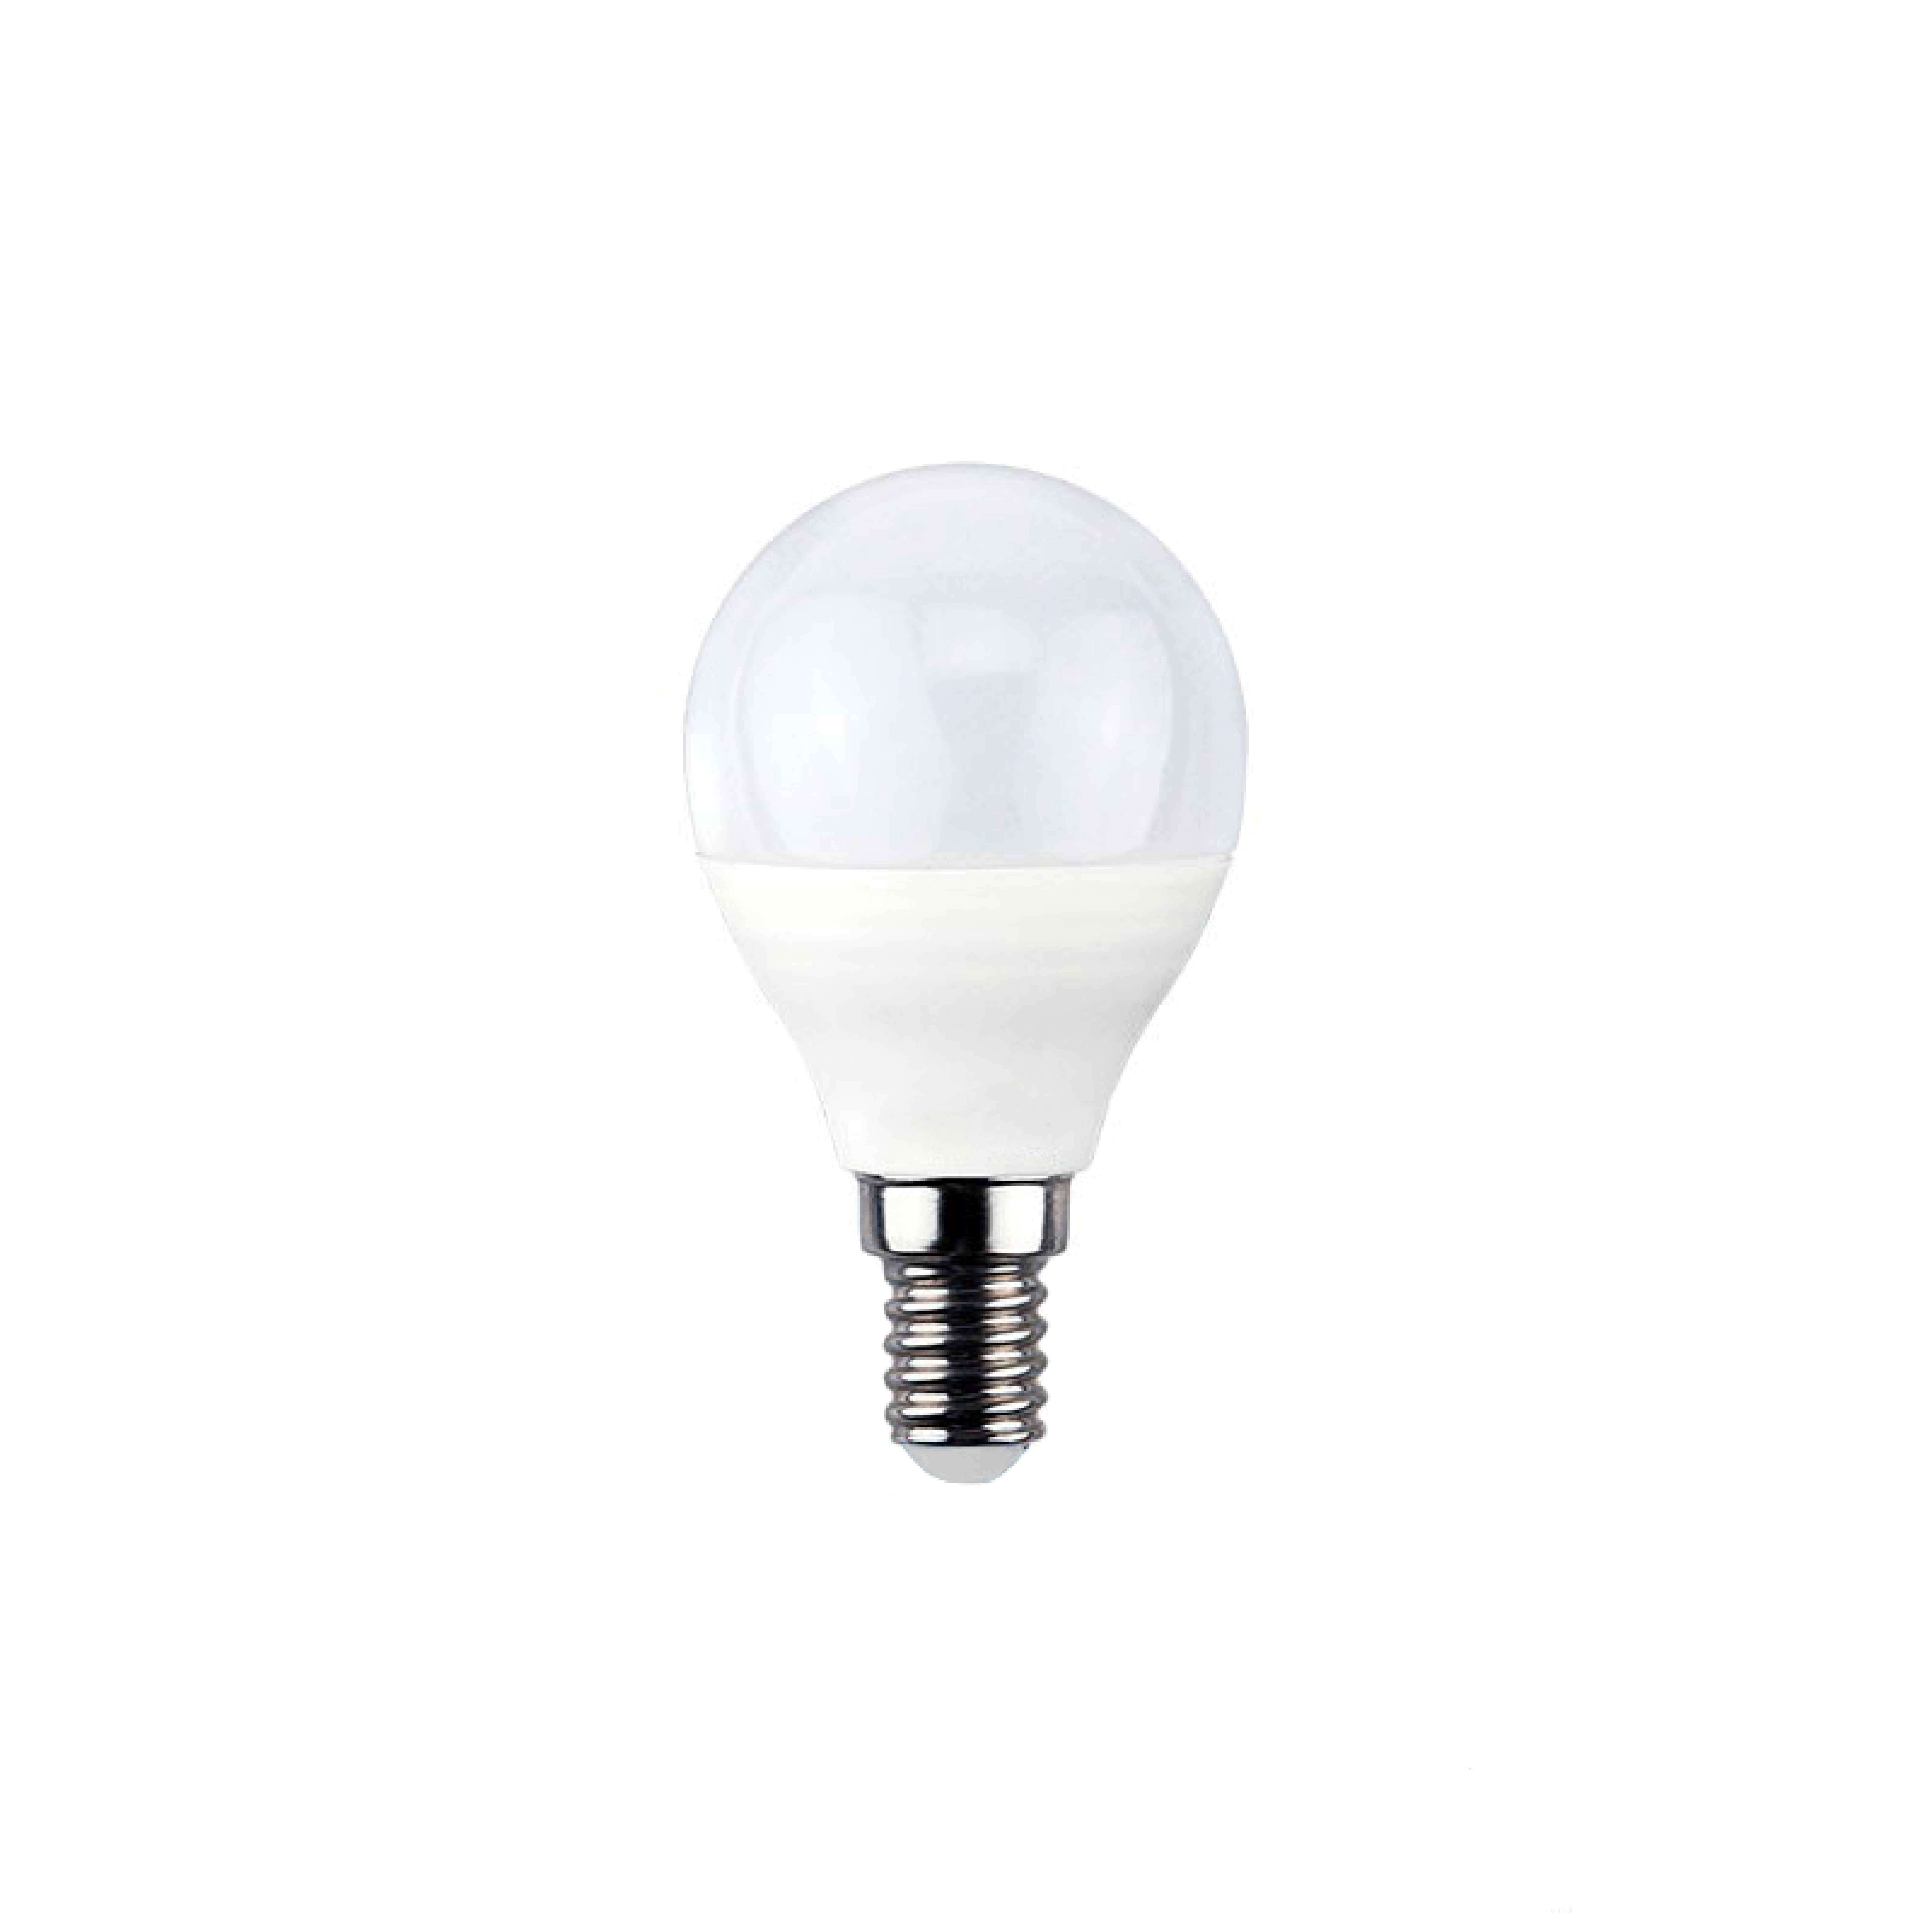 EOL Acme LED Globe 6W, 3000K warm white, E14